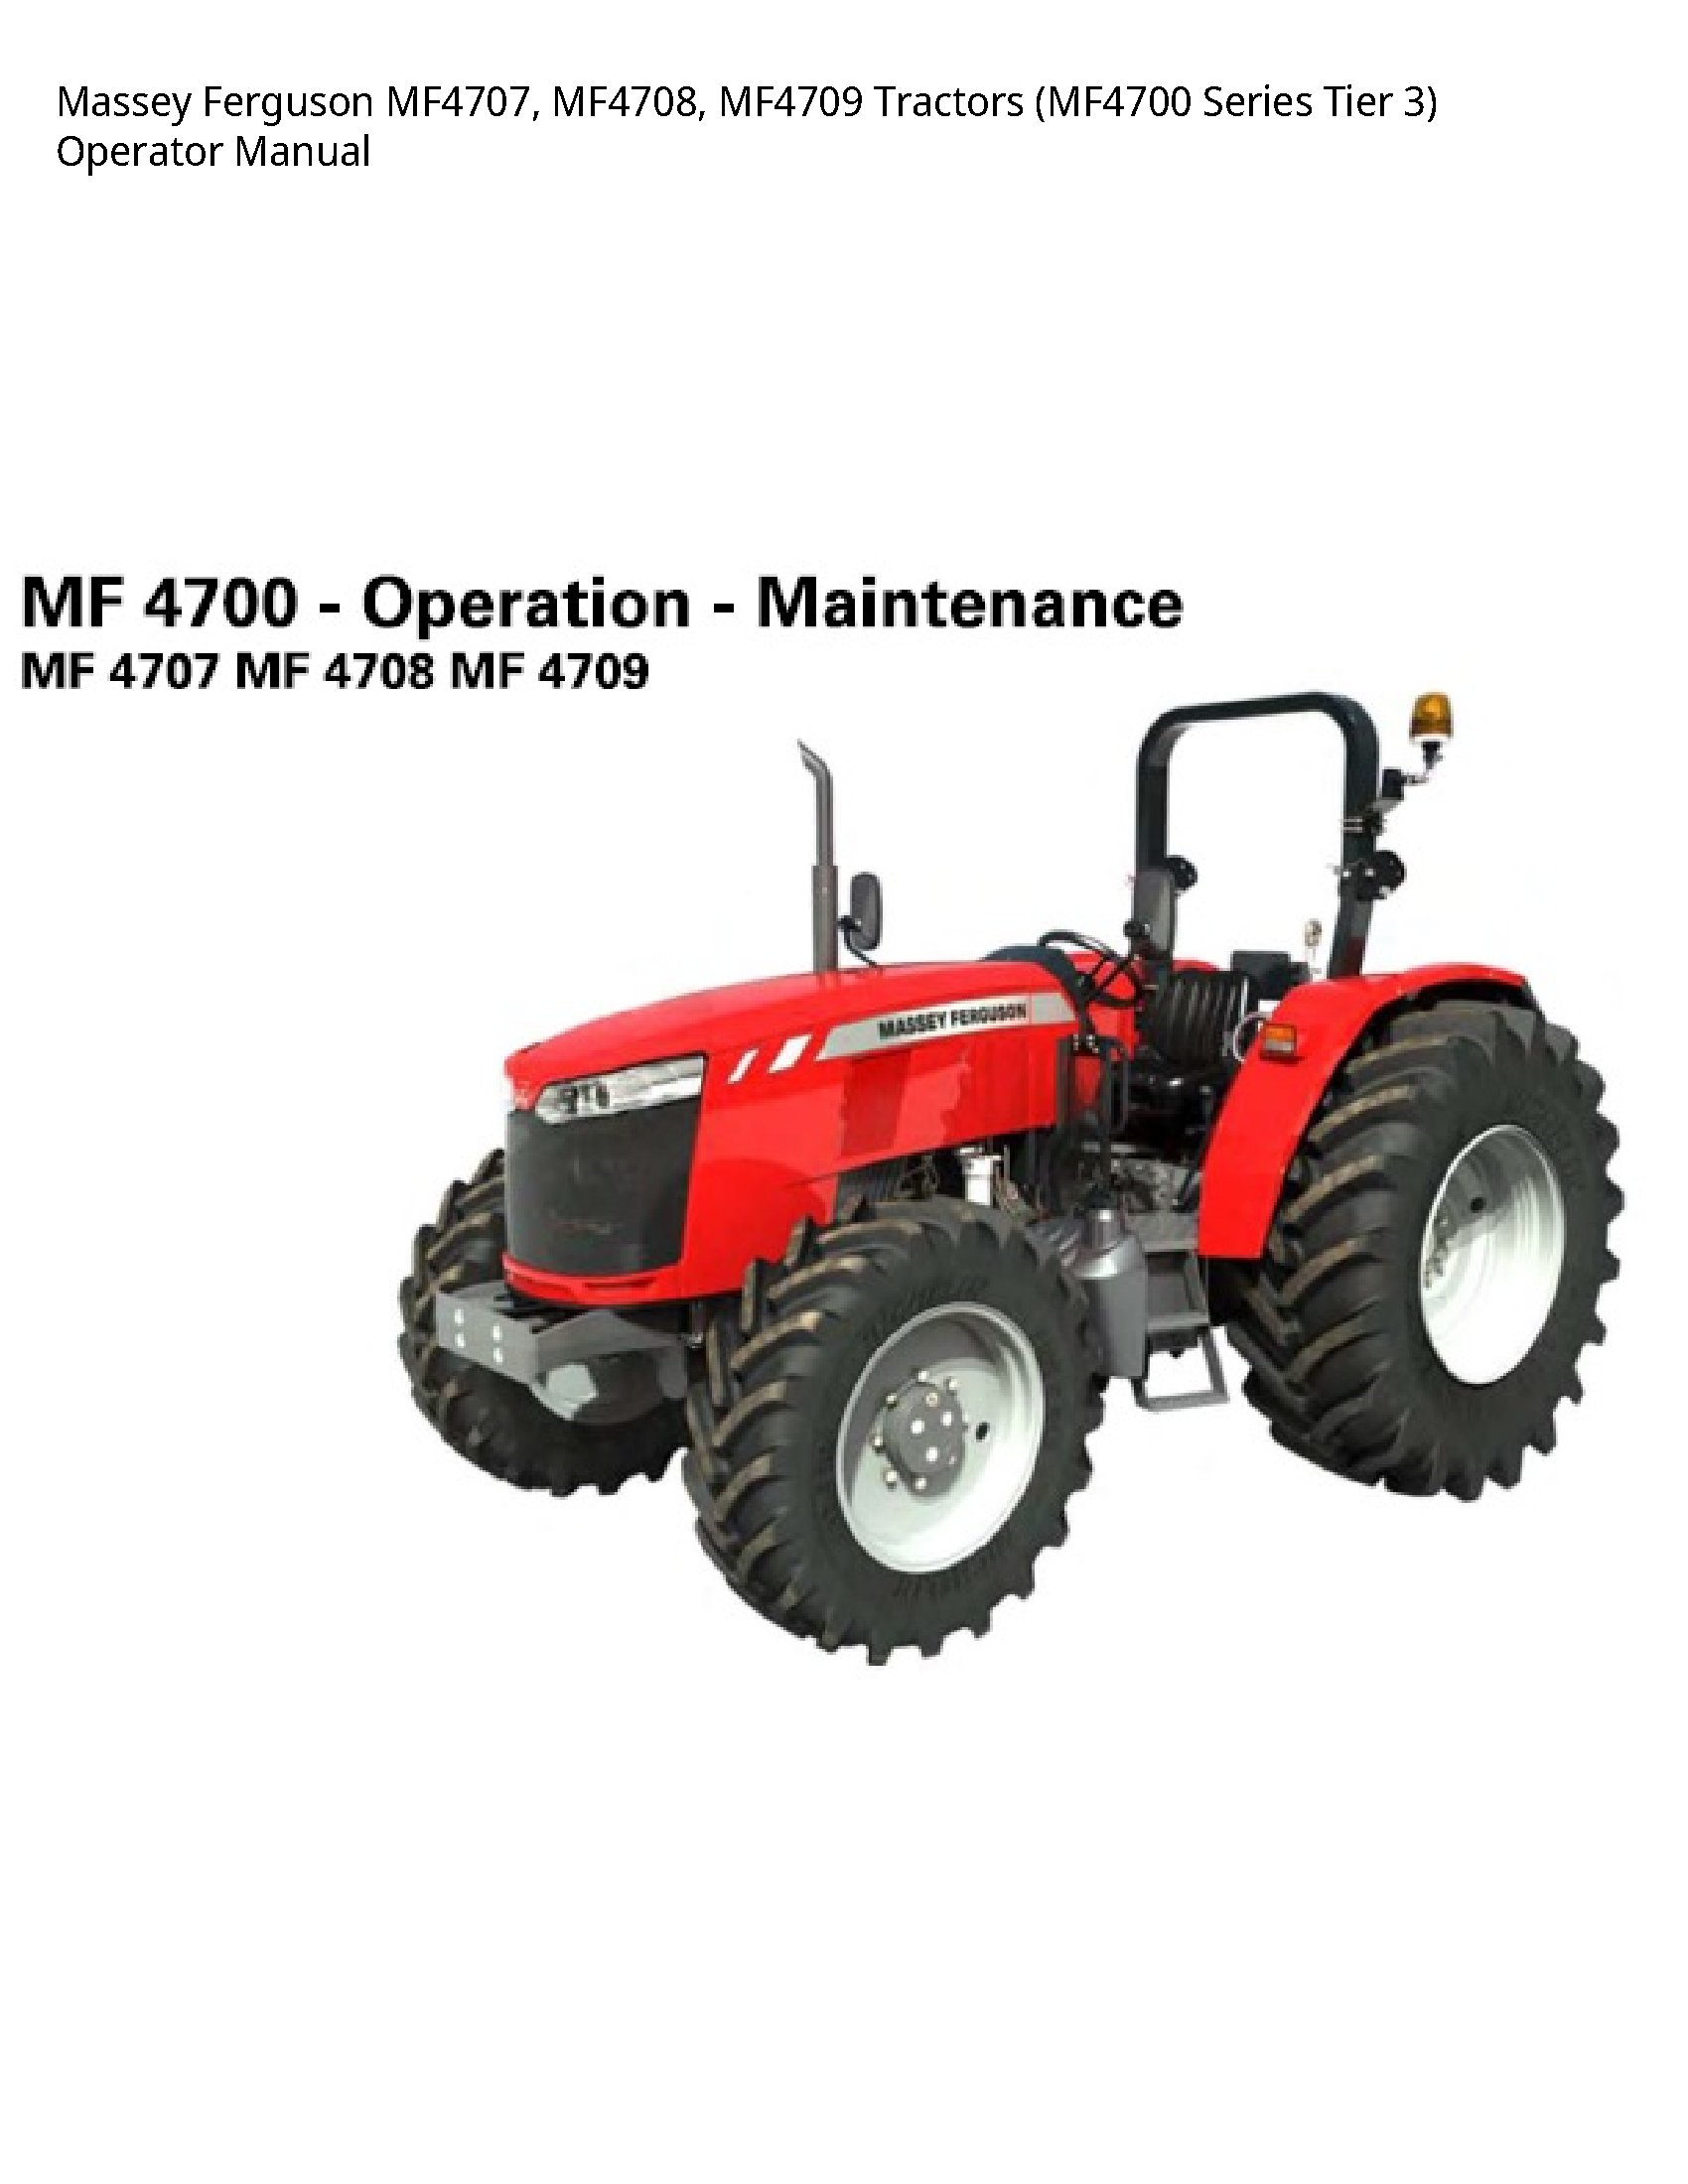 Massey Ferguson MF4707 Tractors Series Tier Operator manual